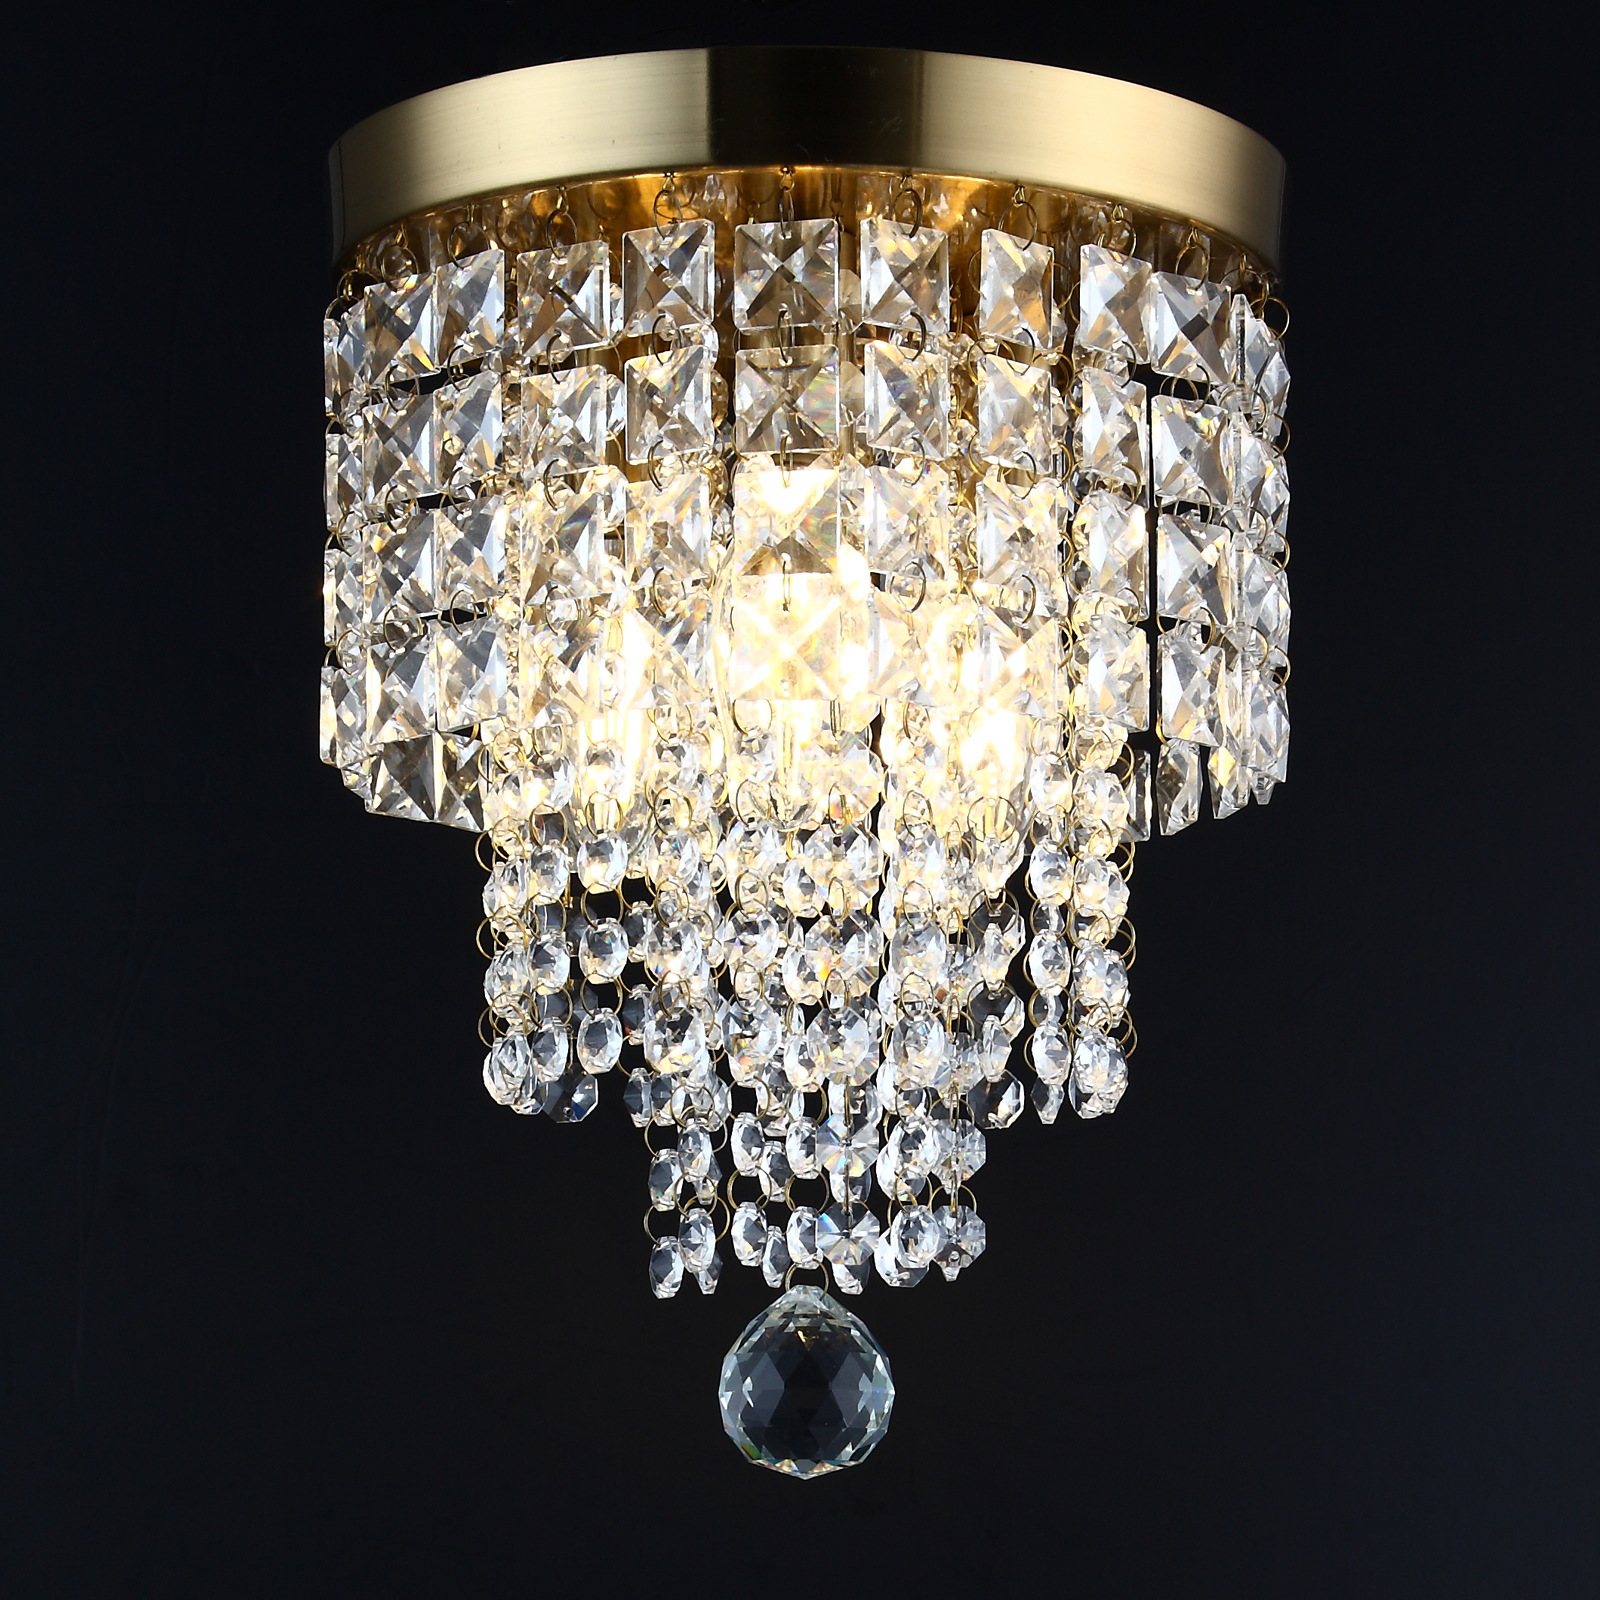 Gold Crystal Small Chandelier 3-Light Lamp Chandeliers, Flush Mount Ceiling Pendant Lighting Fixture for Bedroom, Living Room, Dinning Room